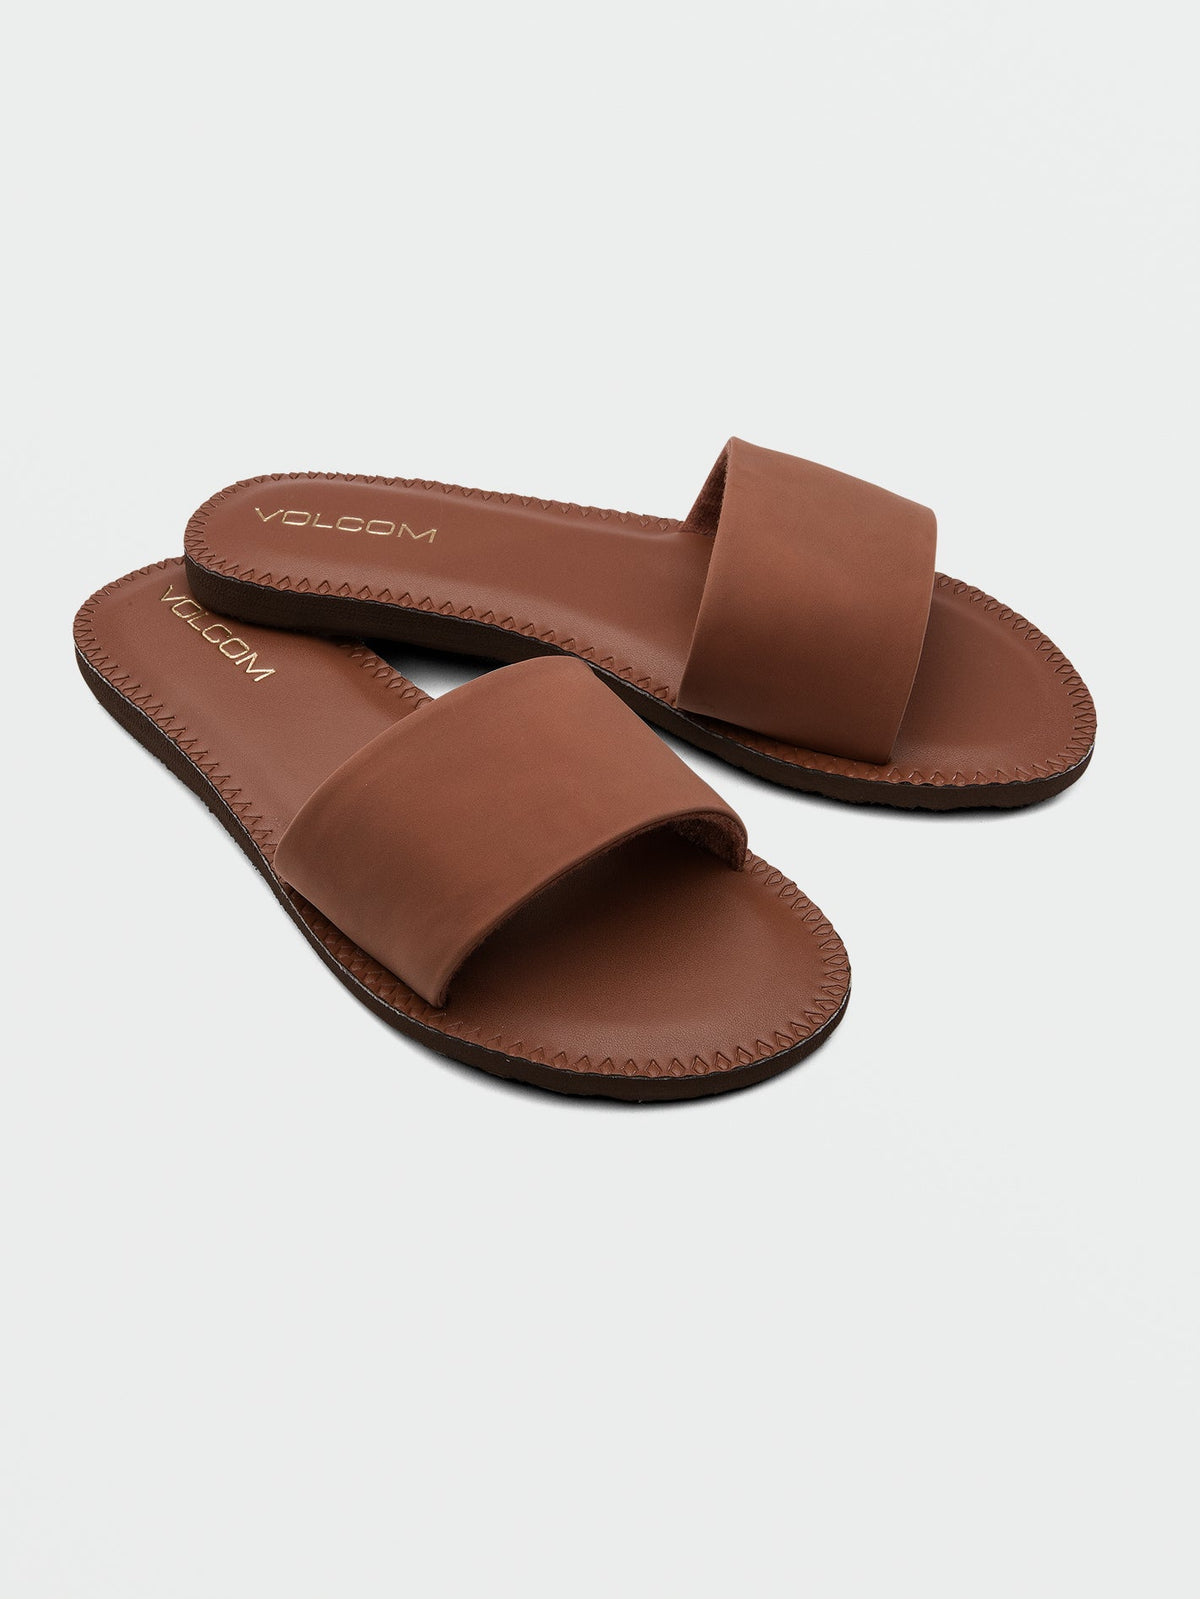 Volcom Simple Slide Women's Sandals Dark Clay